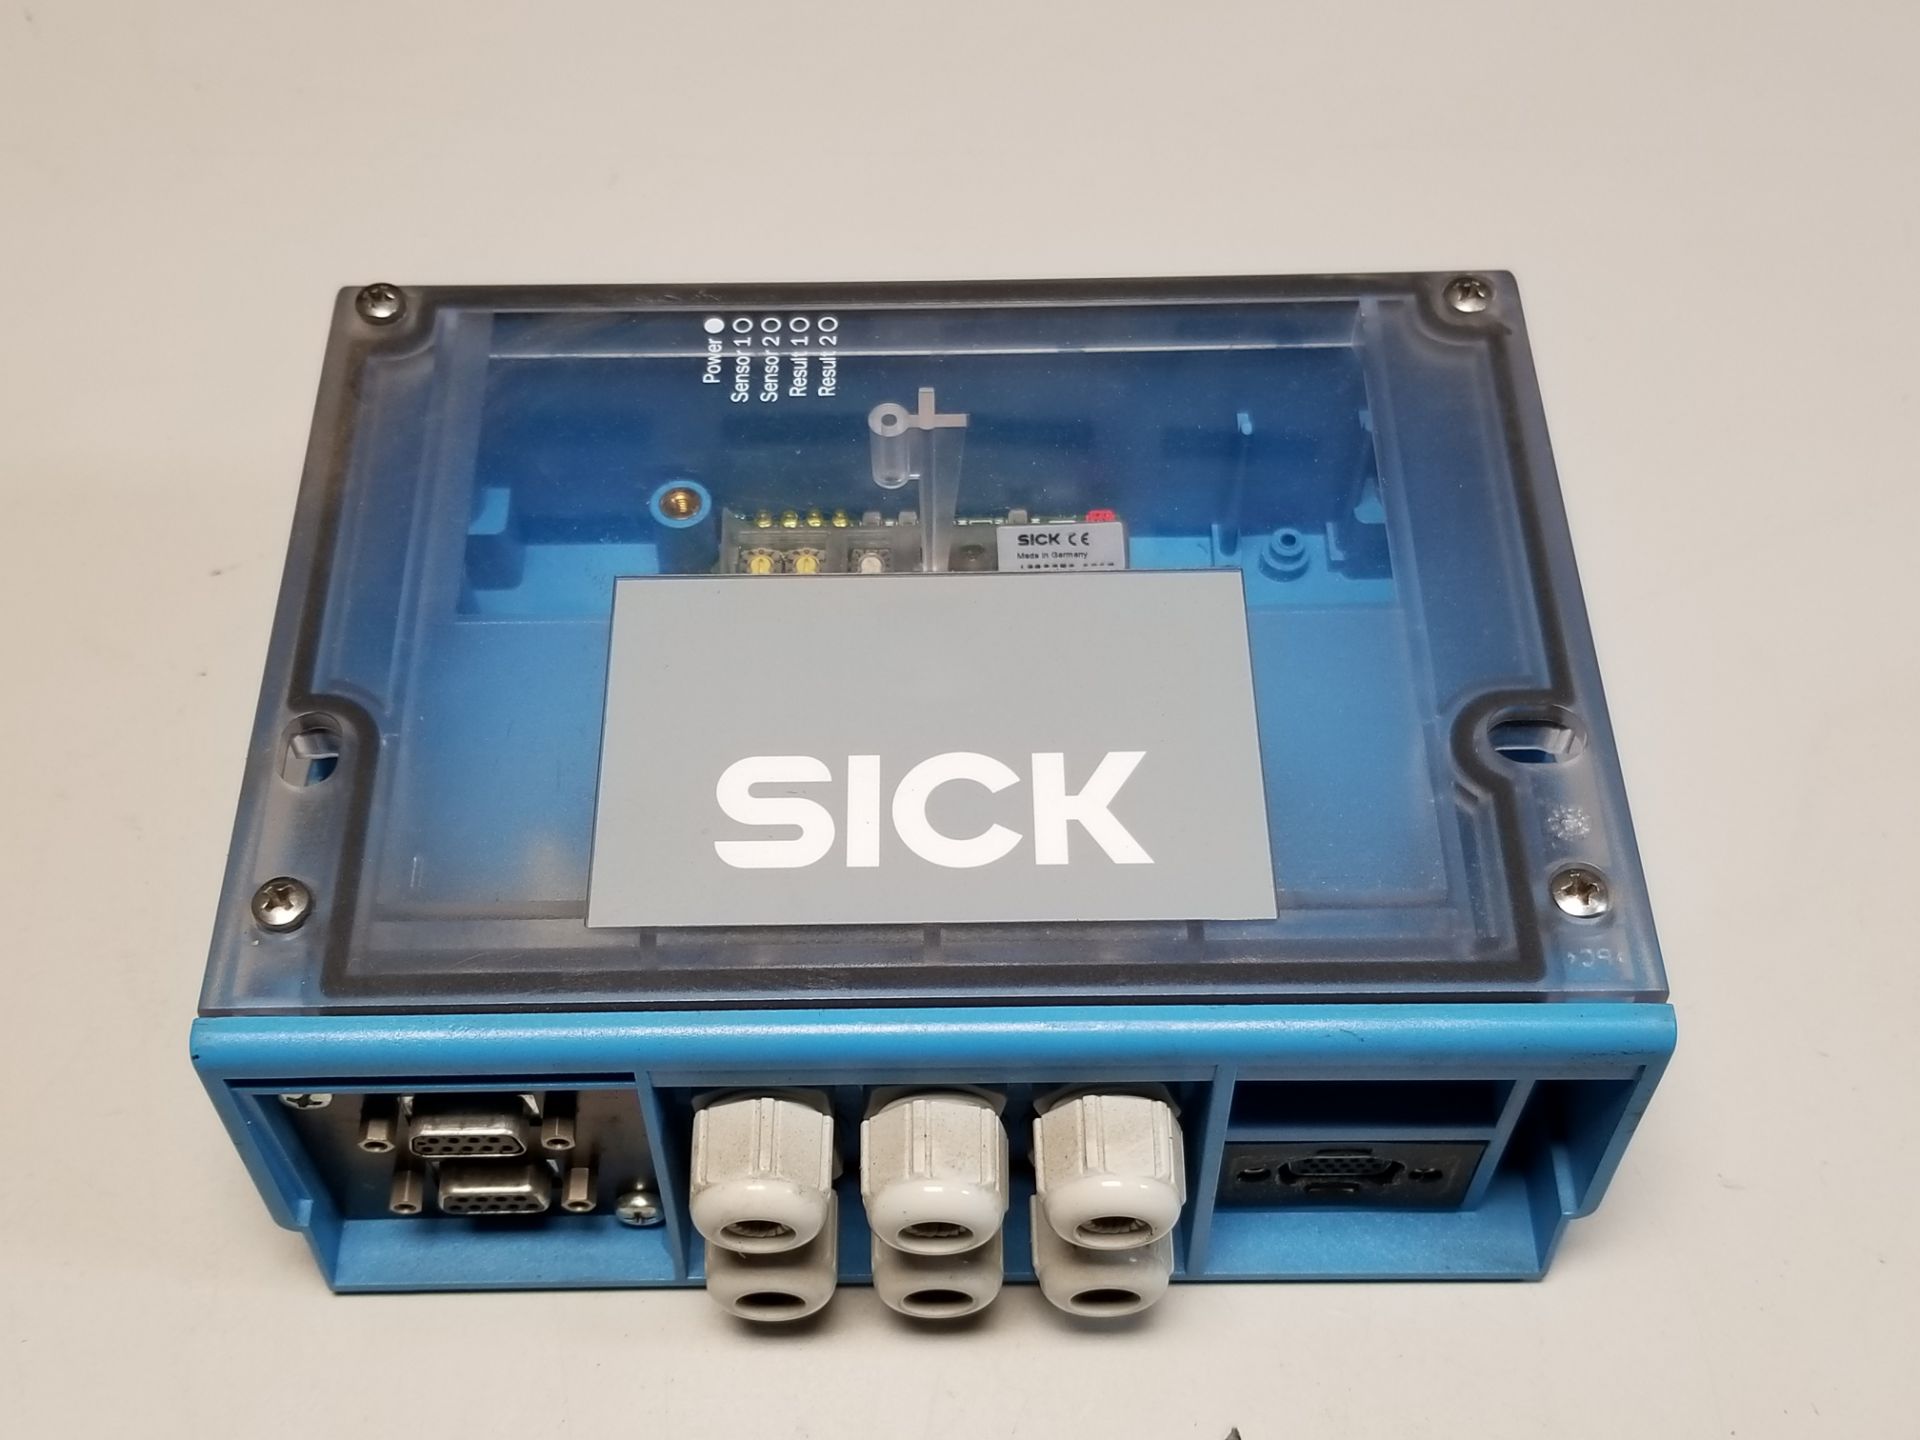 Sick Proximity Sensor Connection Module & Cloning Interface